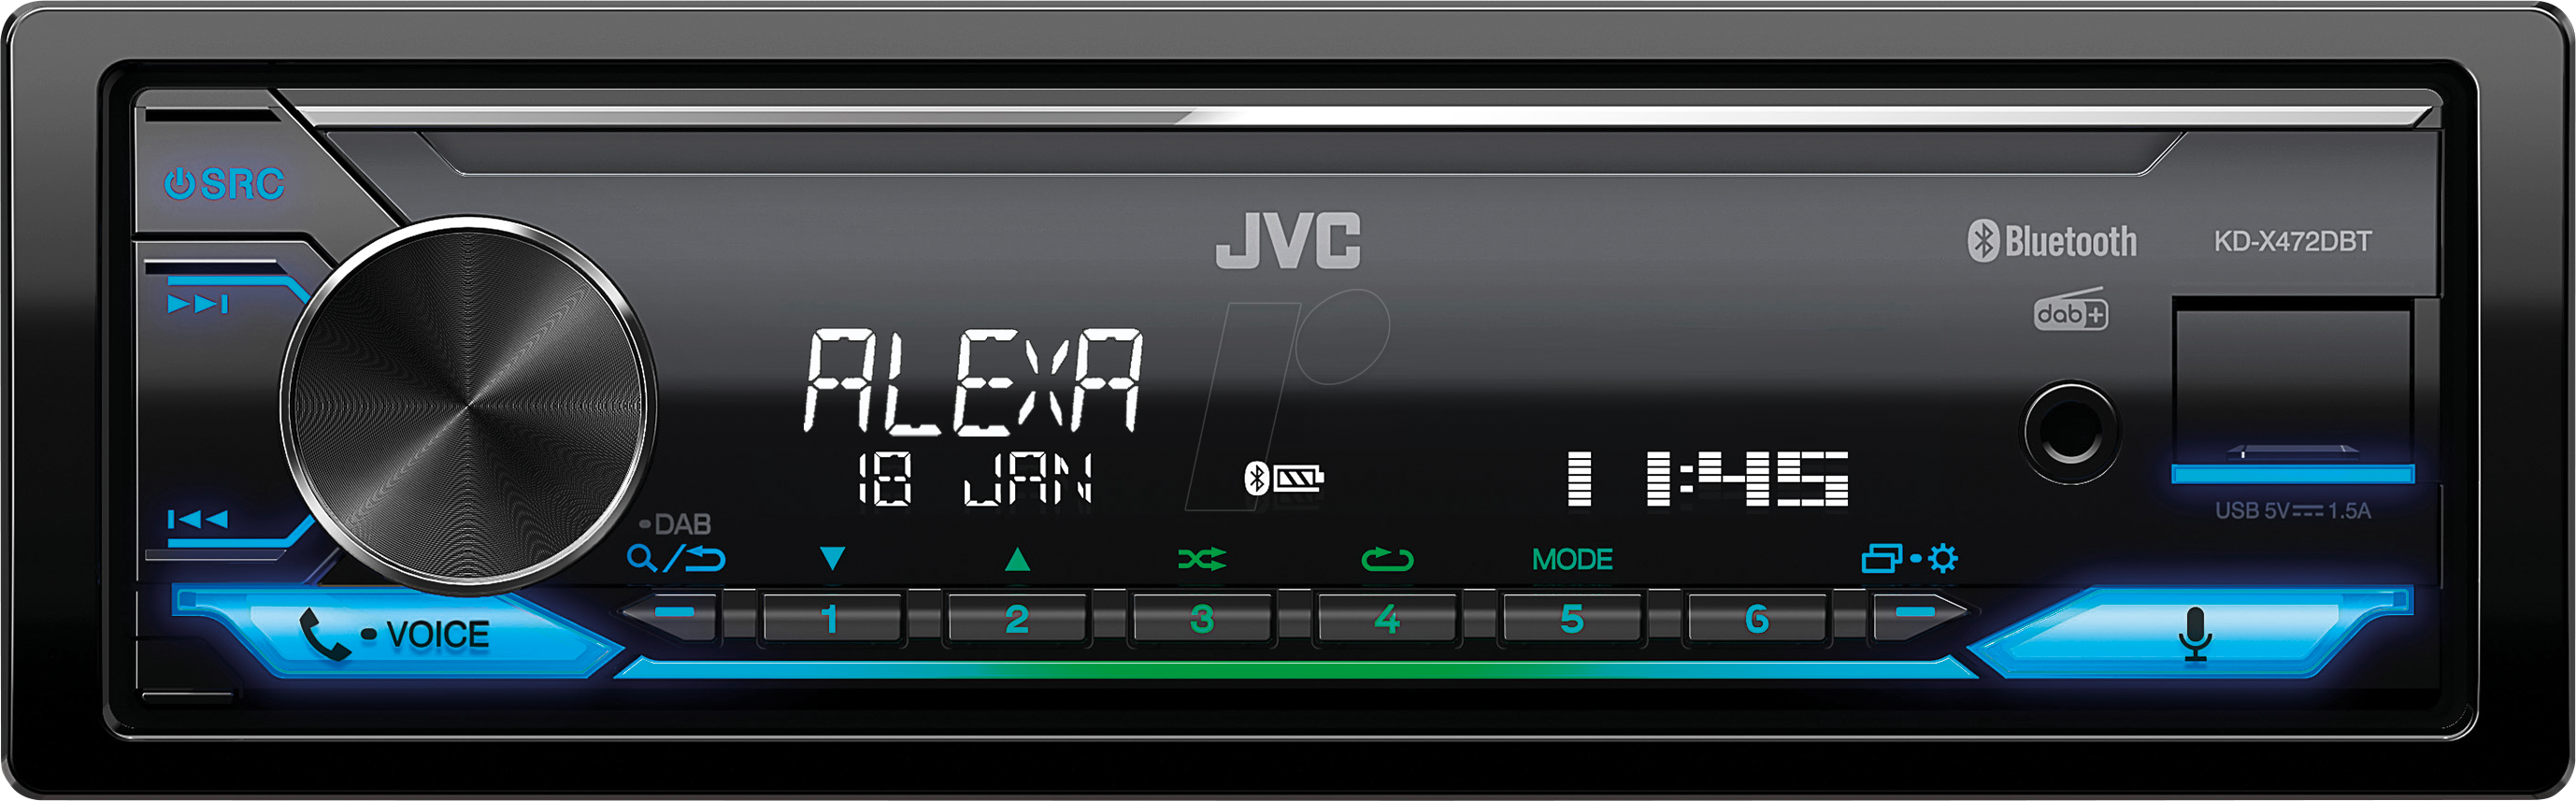 JVC KD-X472DBT - Autoradio, DAB+, BT, USB, iPhone, 50 W